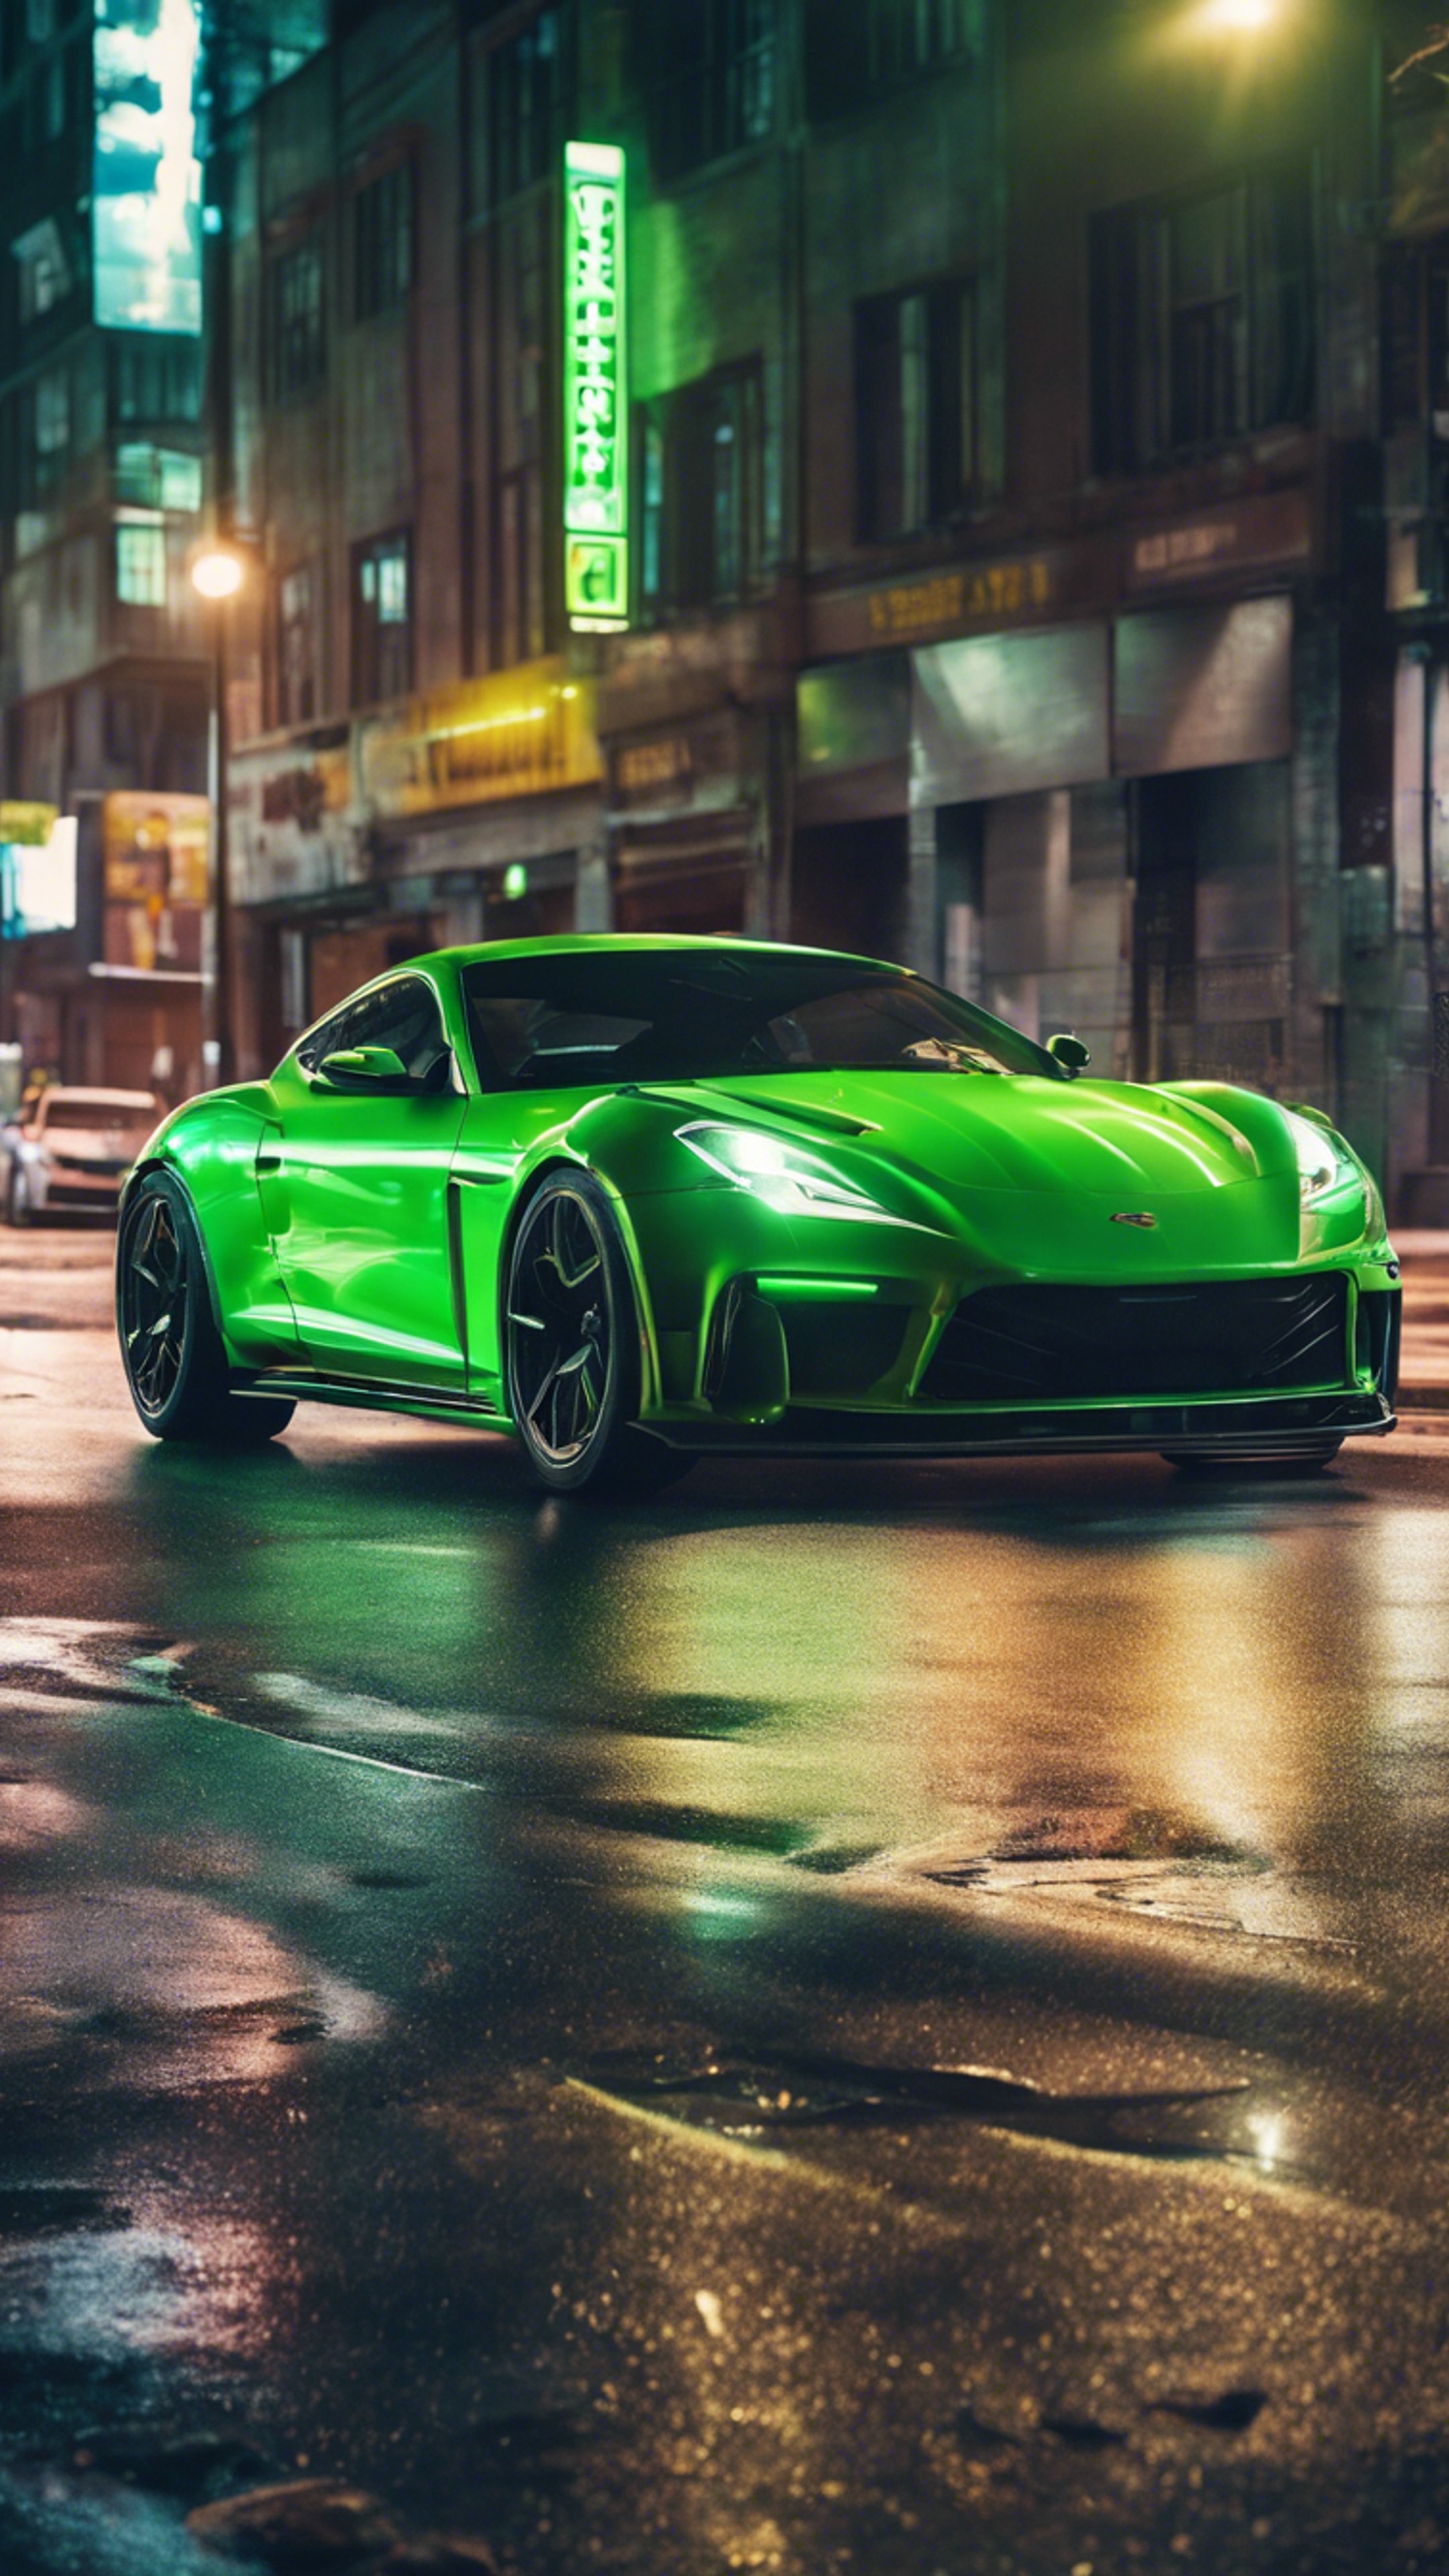 A cool neon green sports car racing down a city street at night. Wallpaper[ff2aa681813144c0b5f6]